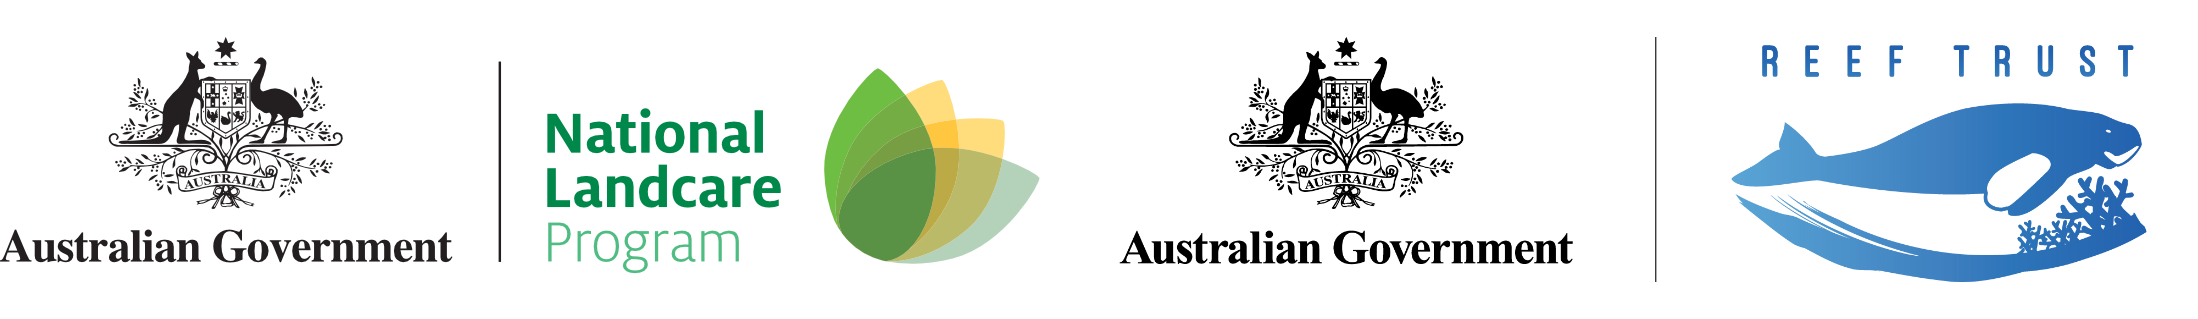 Australian Government logos